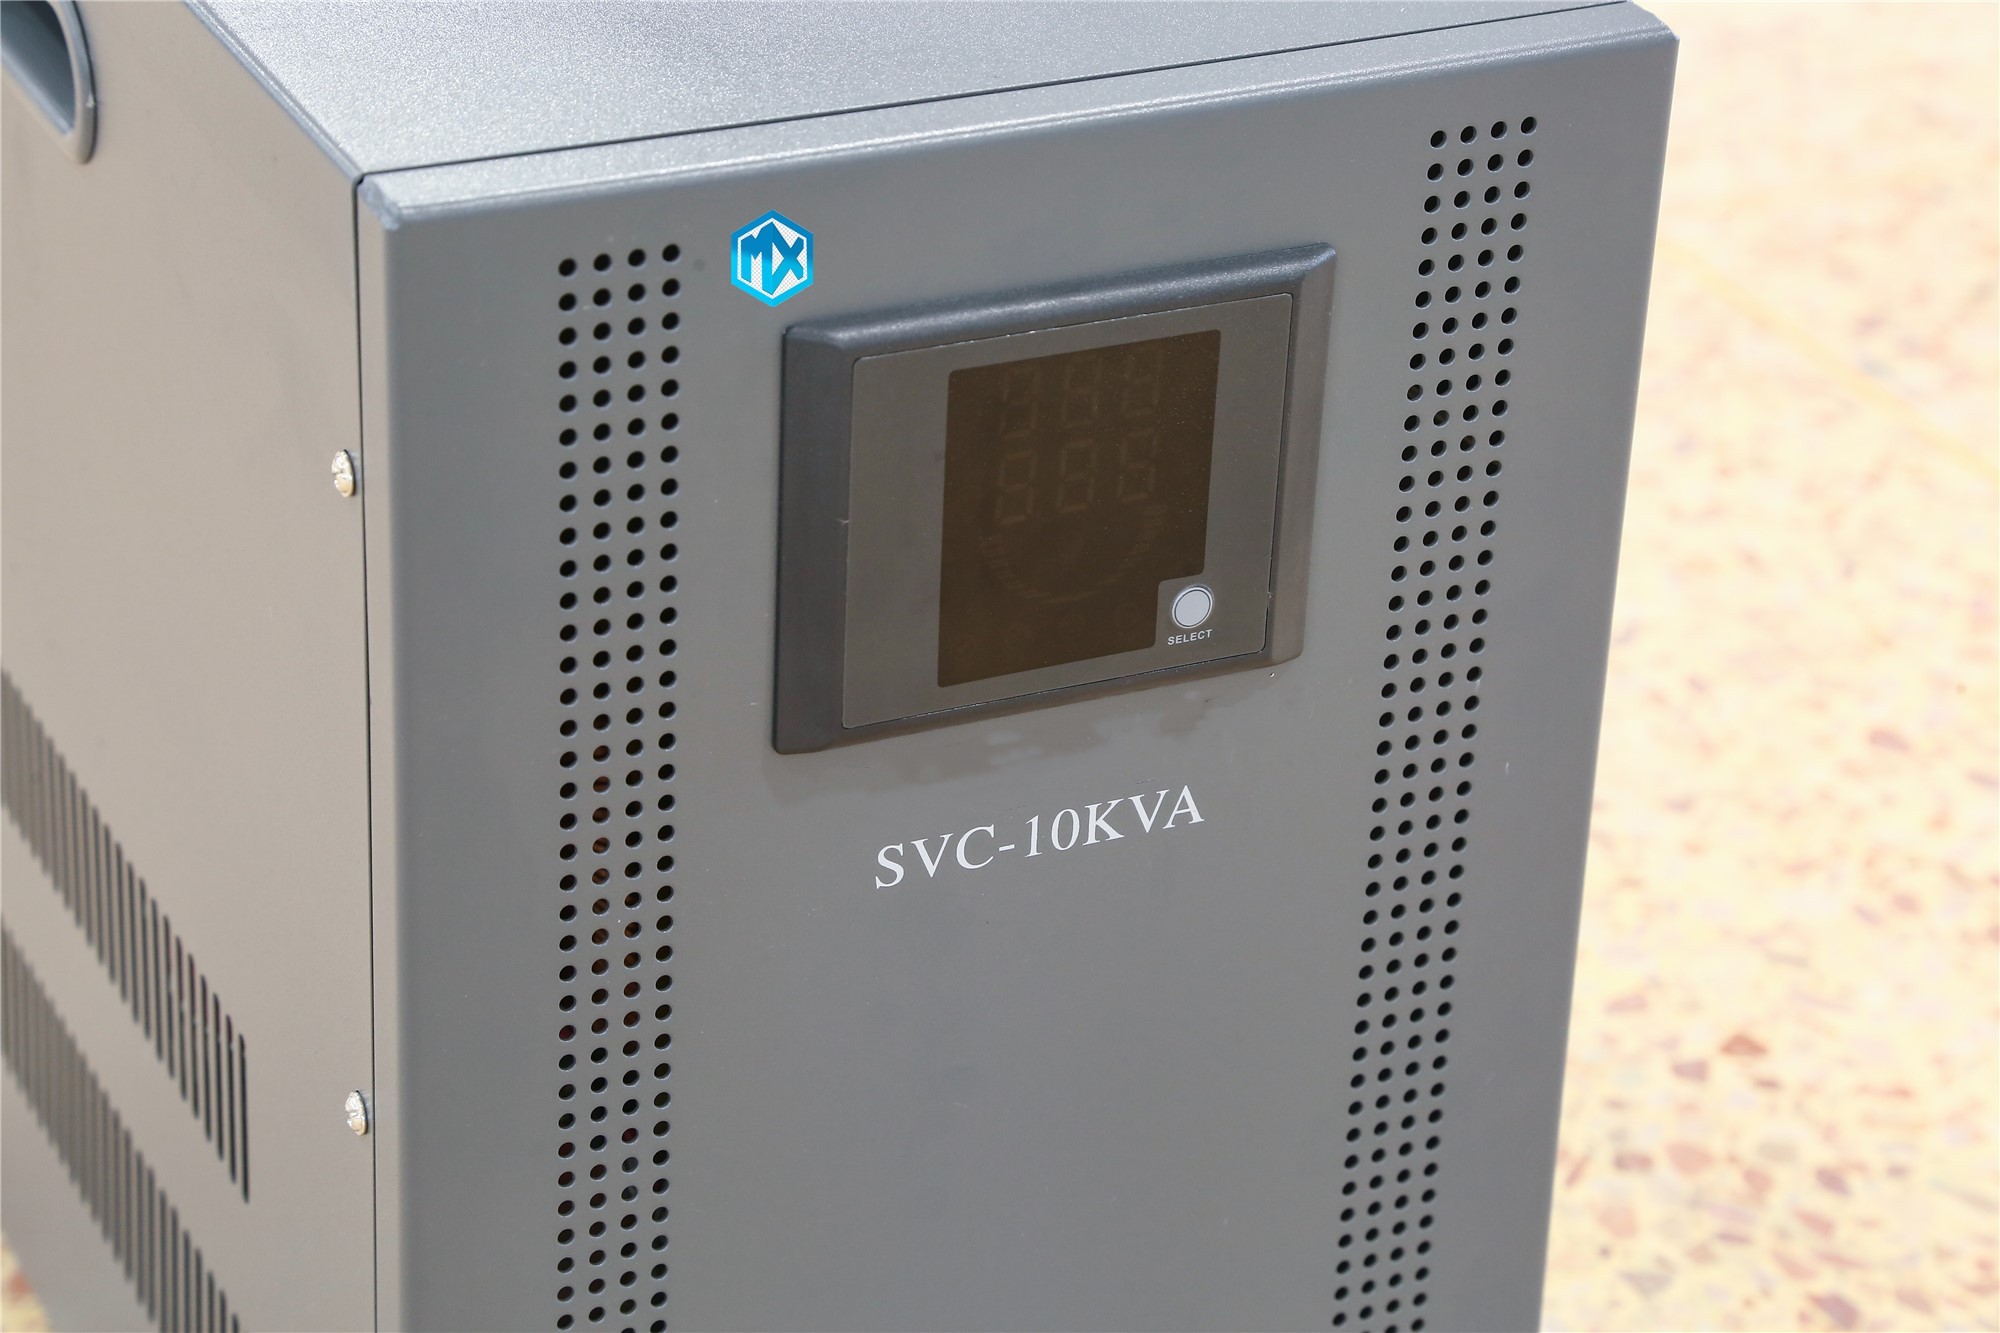 SVC 10KVA Digital voltage stabilizer